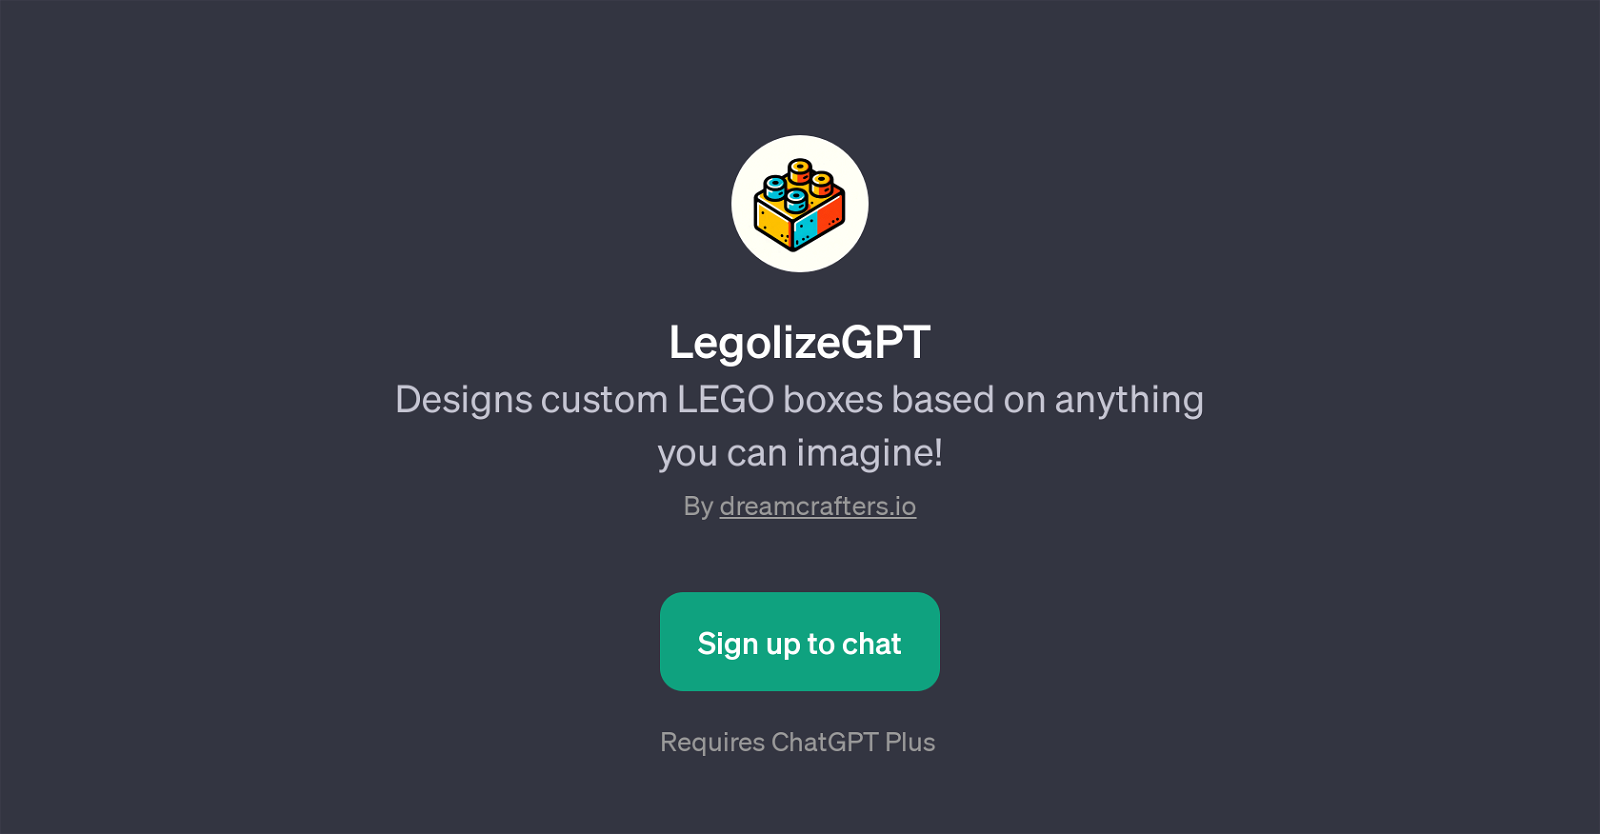 LegolizeGPT website